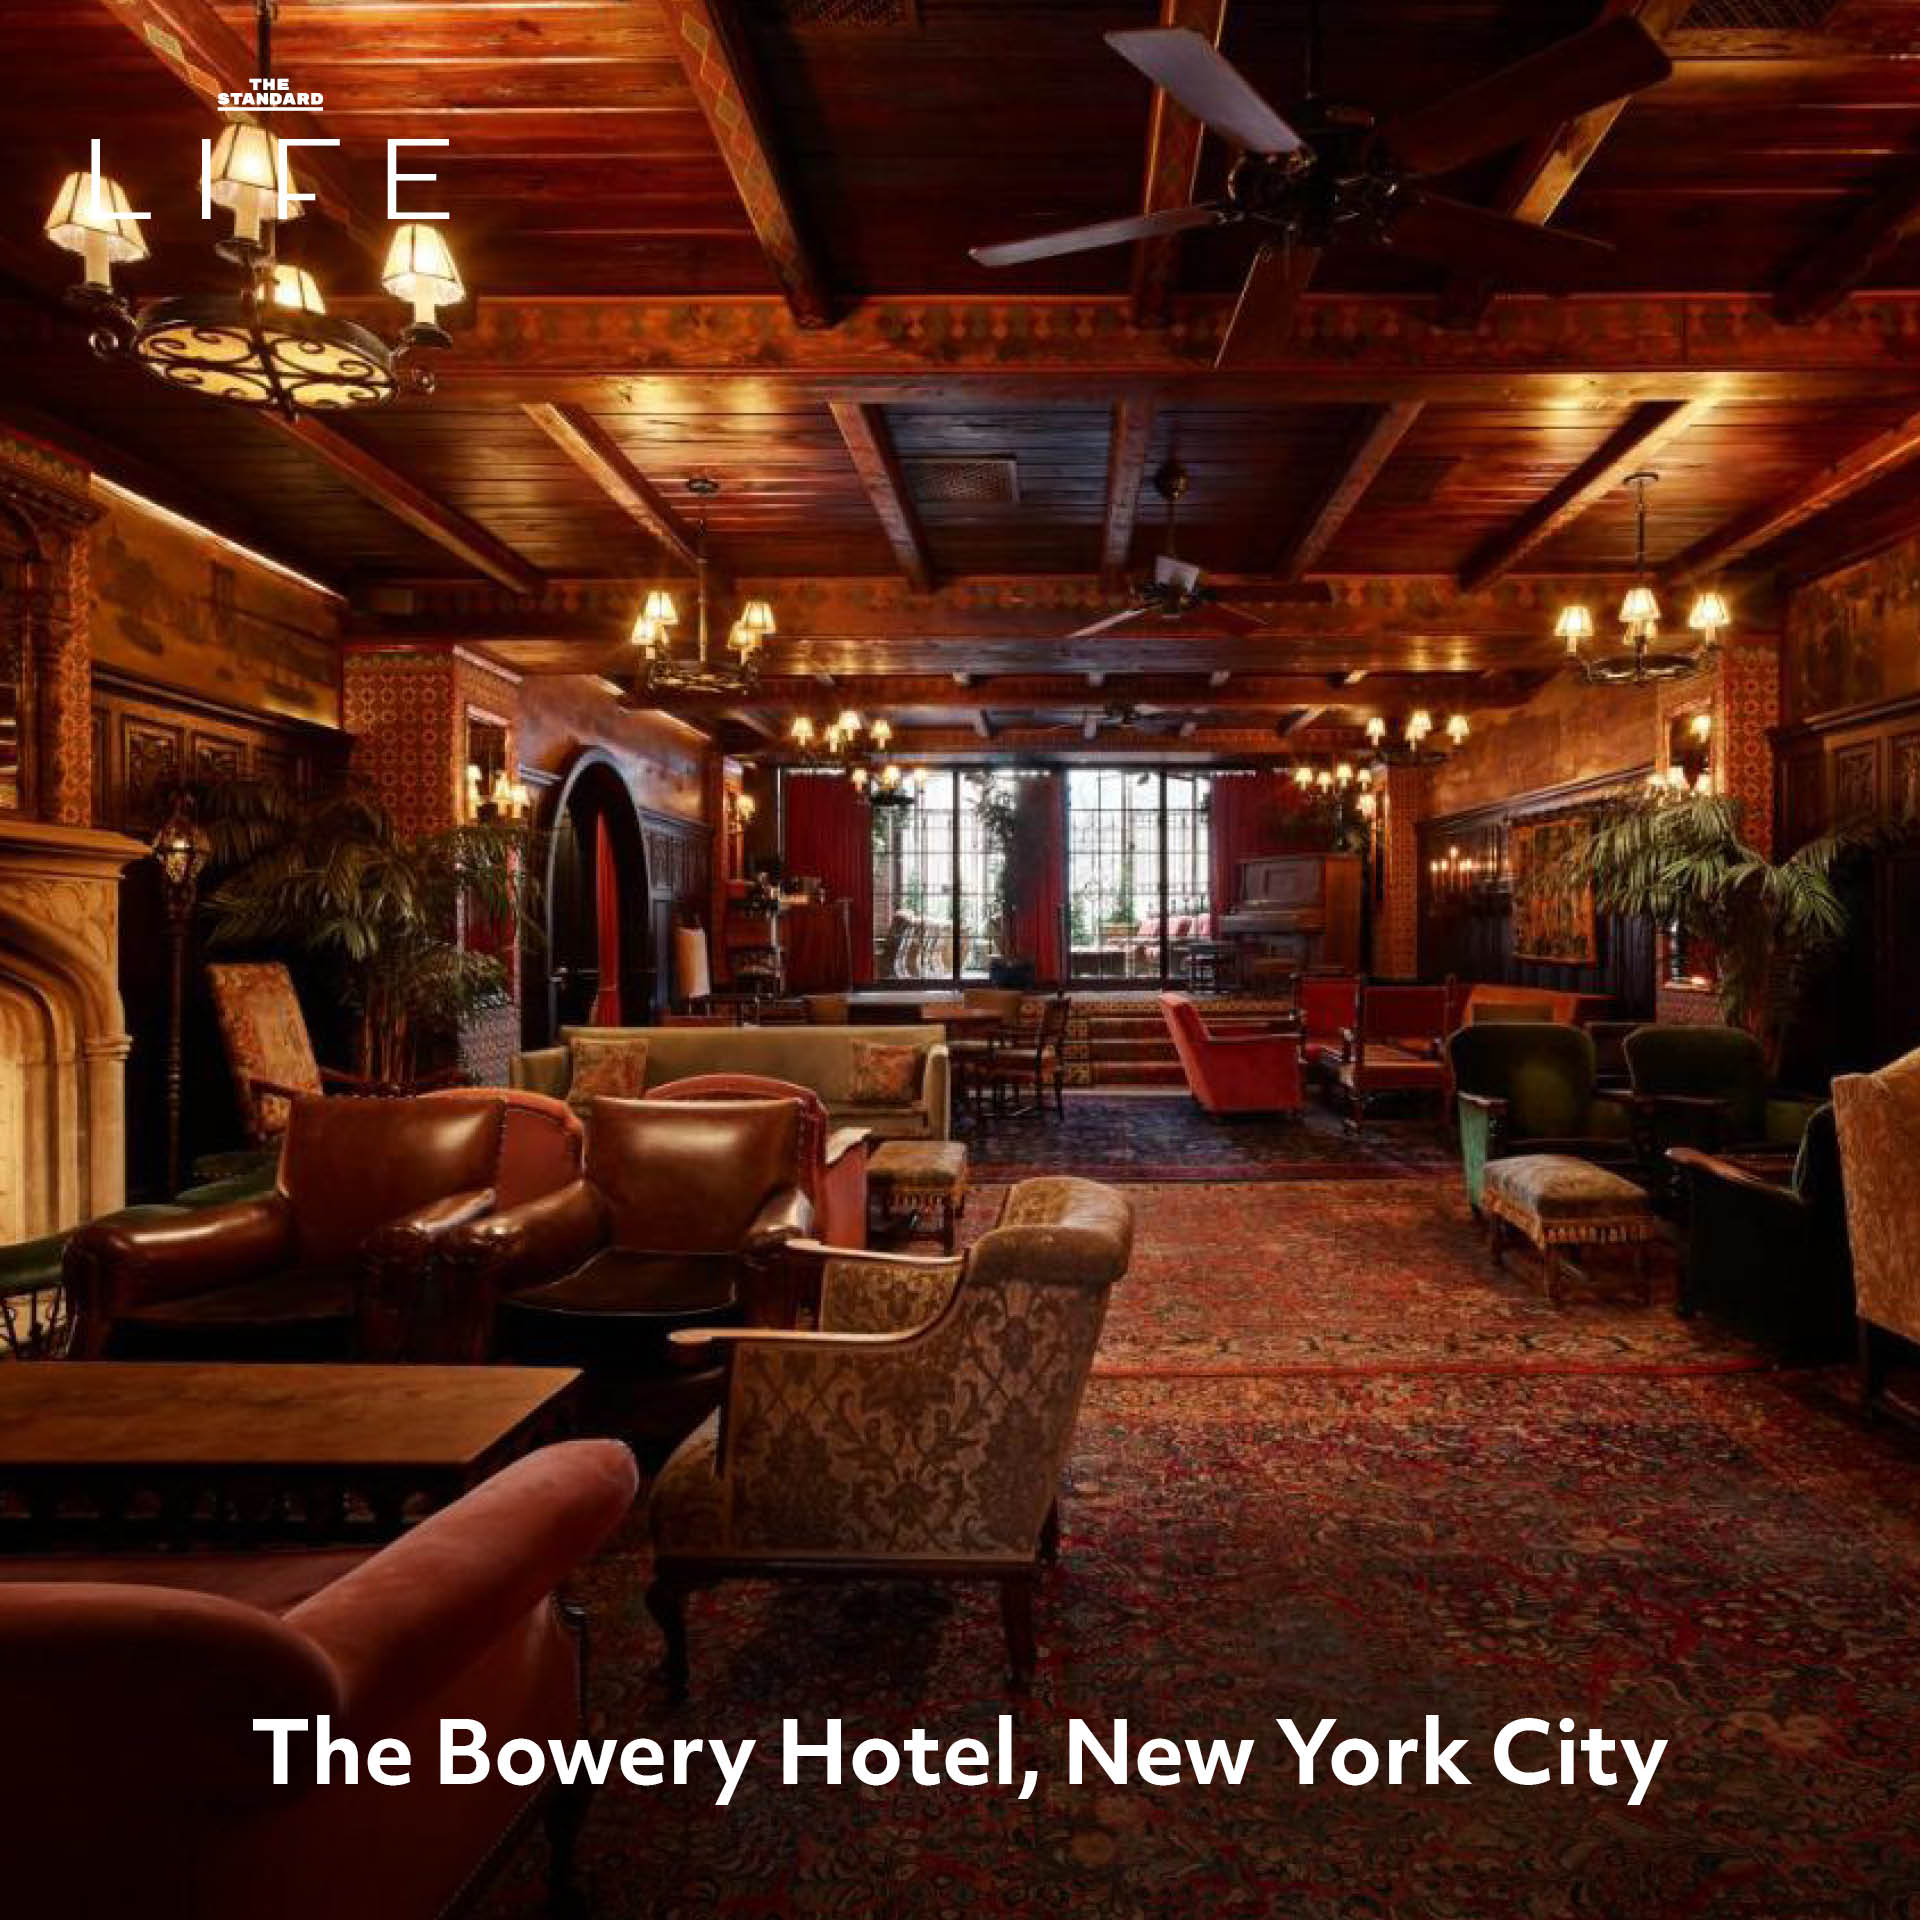 The Bowery Hotel, New York City